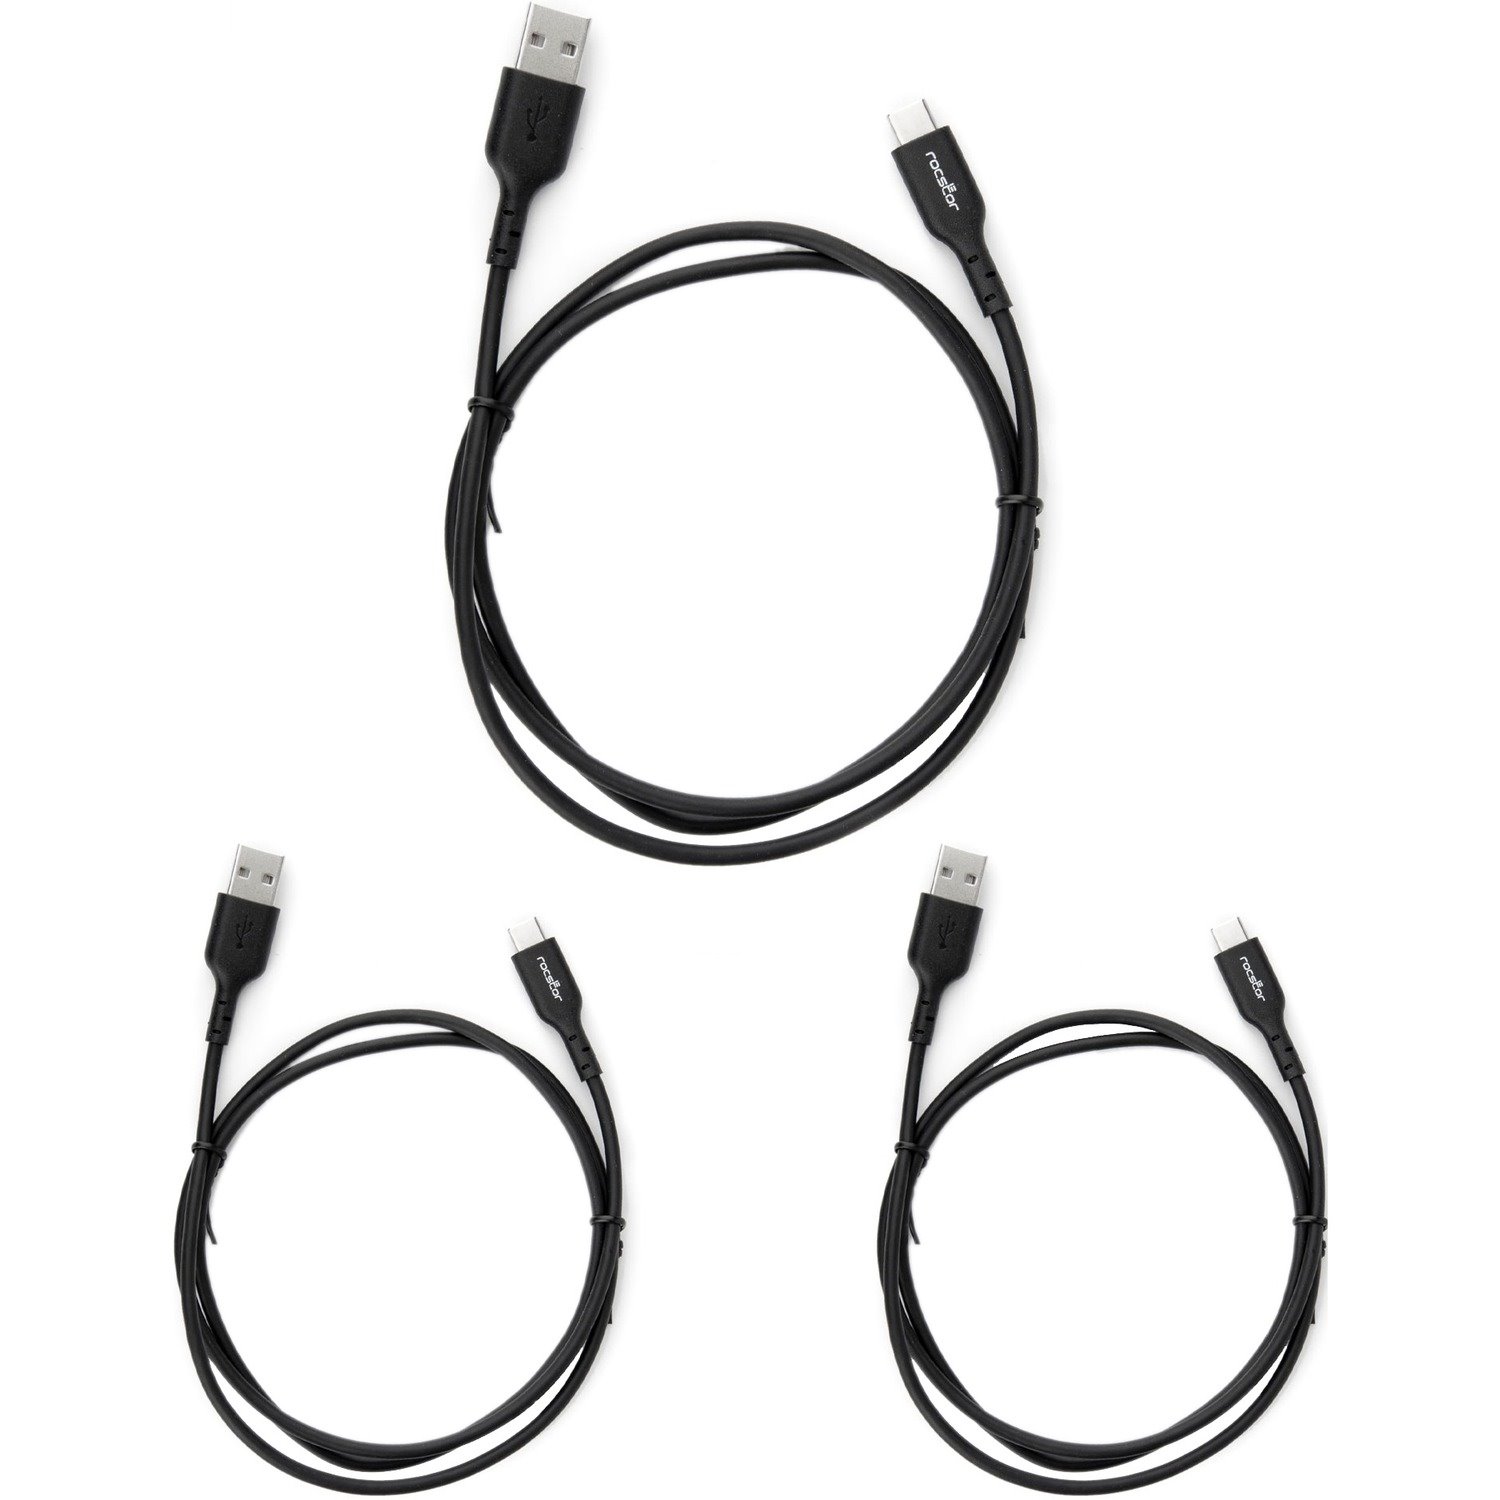 Rocstor Premium USB Data Transfer Cable (3-Pack)